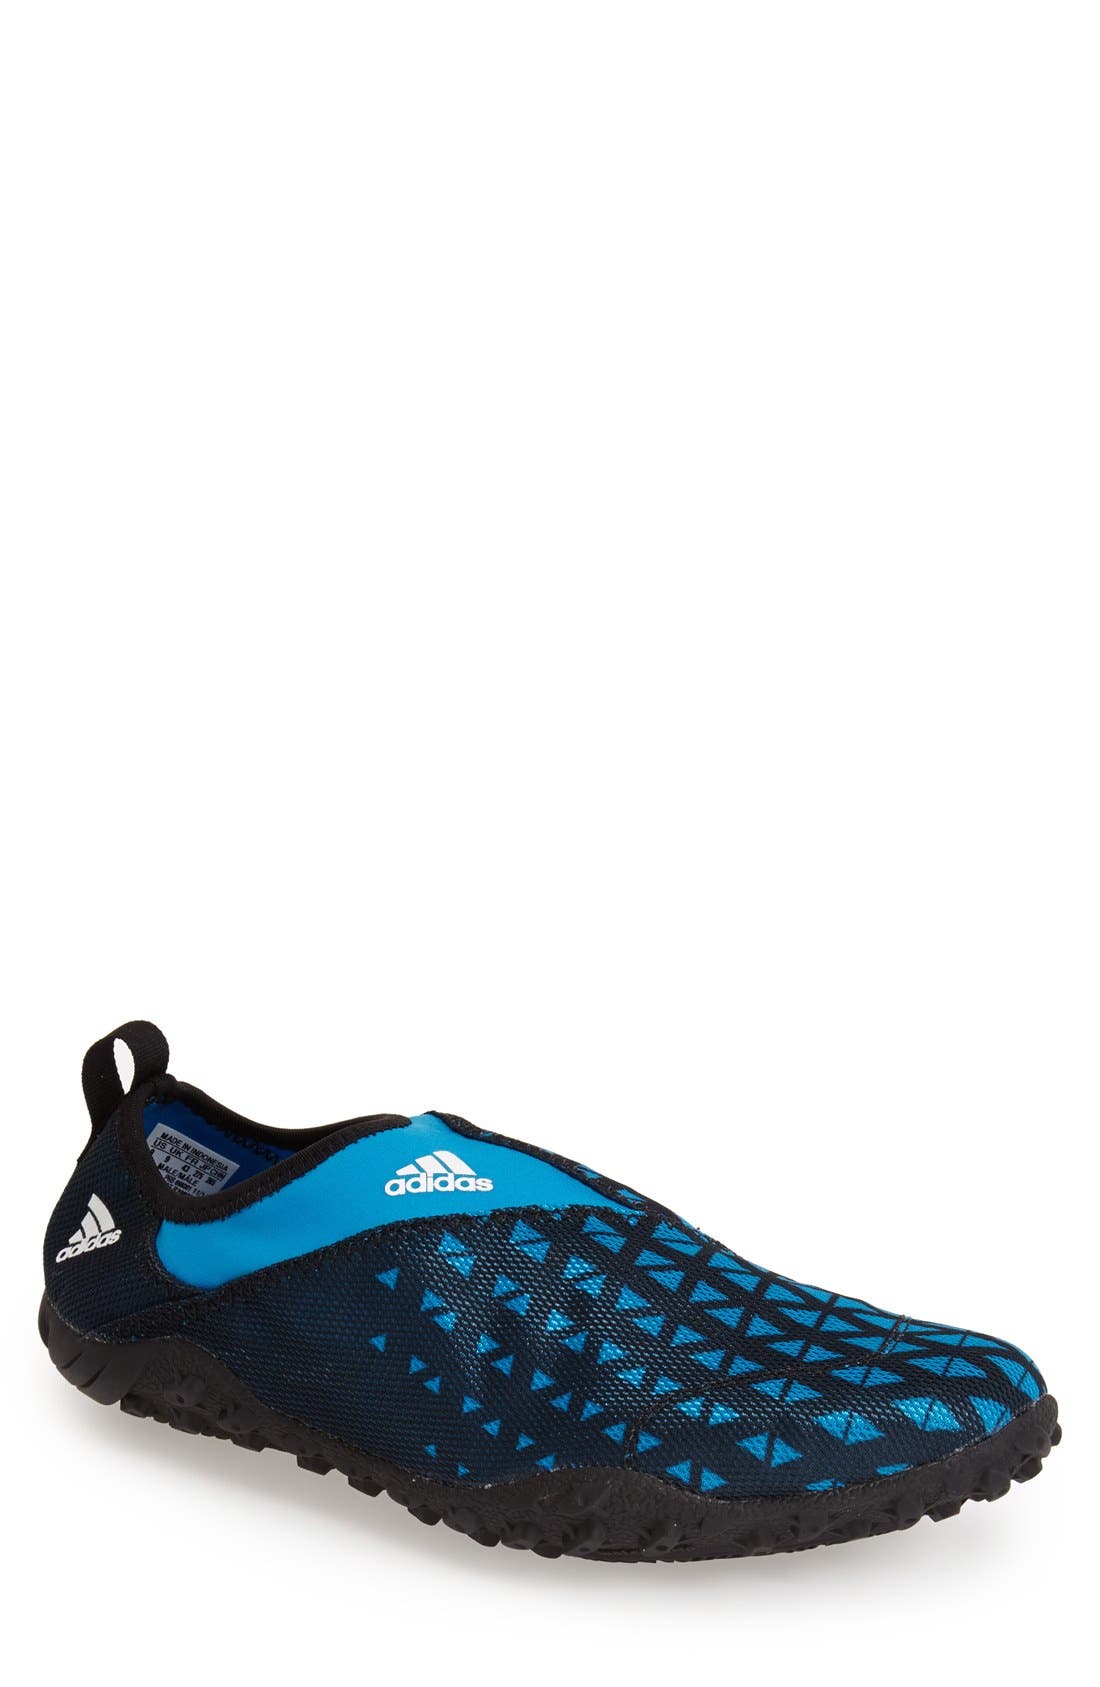 adidas kurobe water shoes